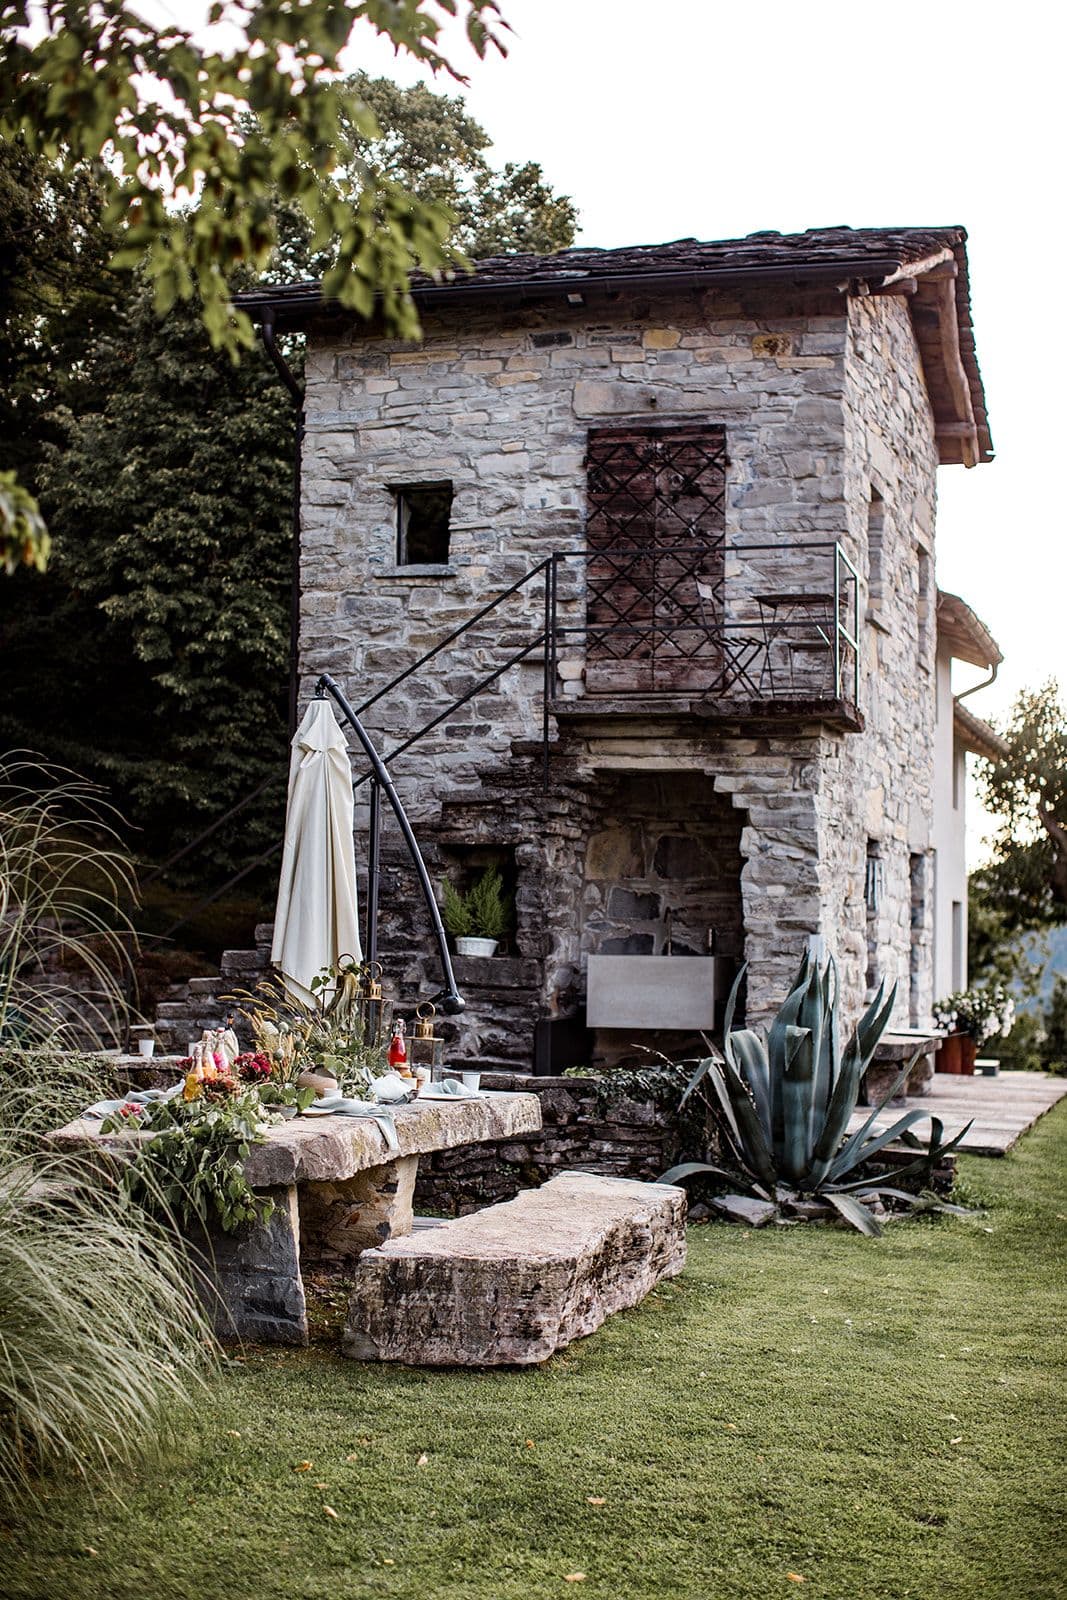 Villa Torno's rustic, classic Italian exterior